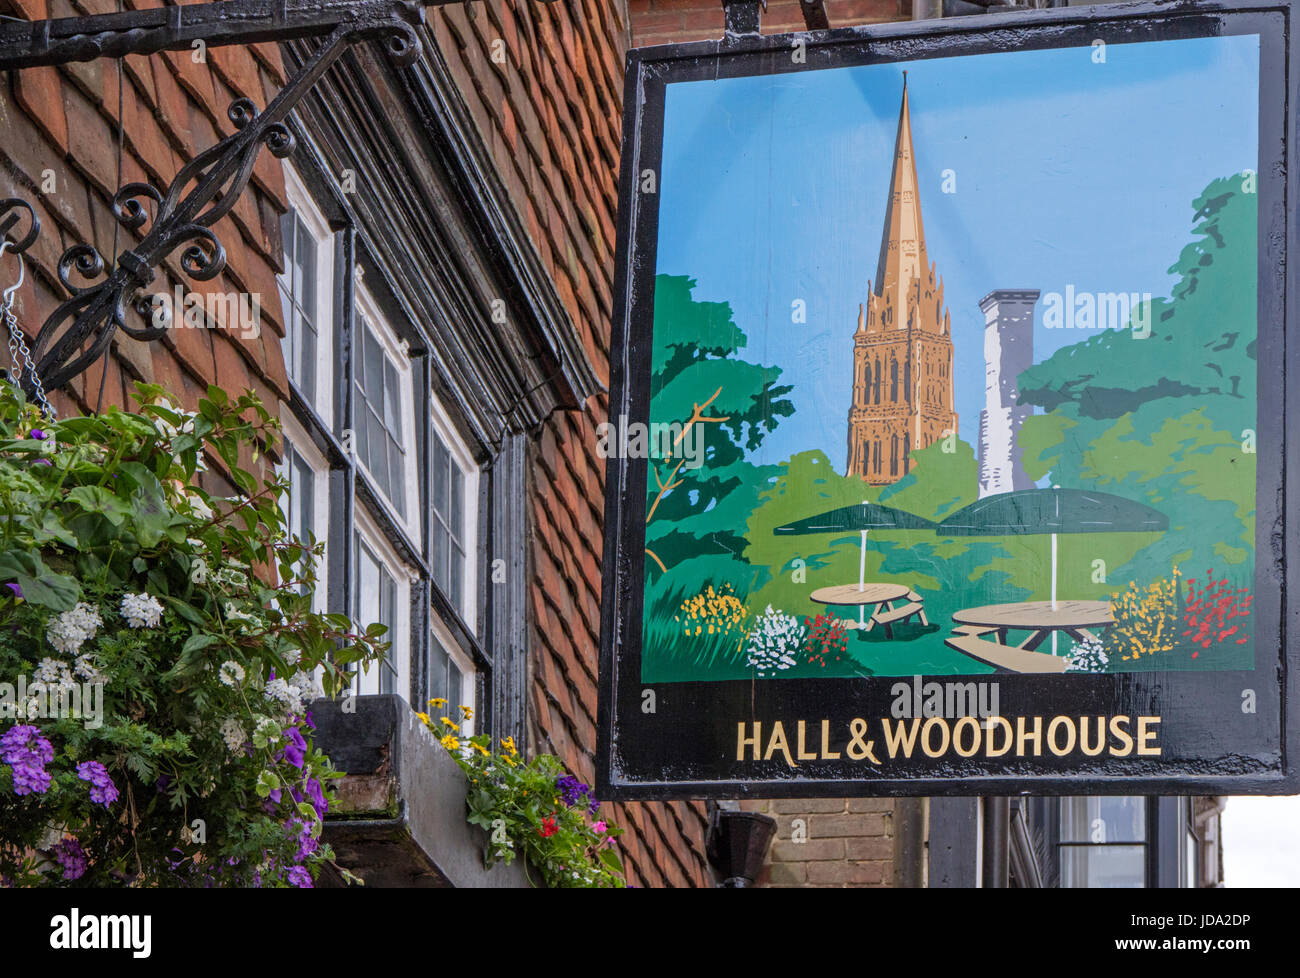 Pub sign for the New Inn, Salisbury, Wiltshire, England, UK Stock Photo